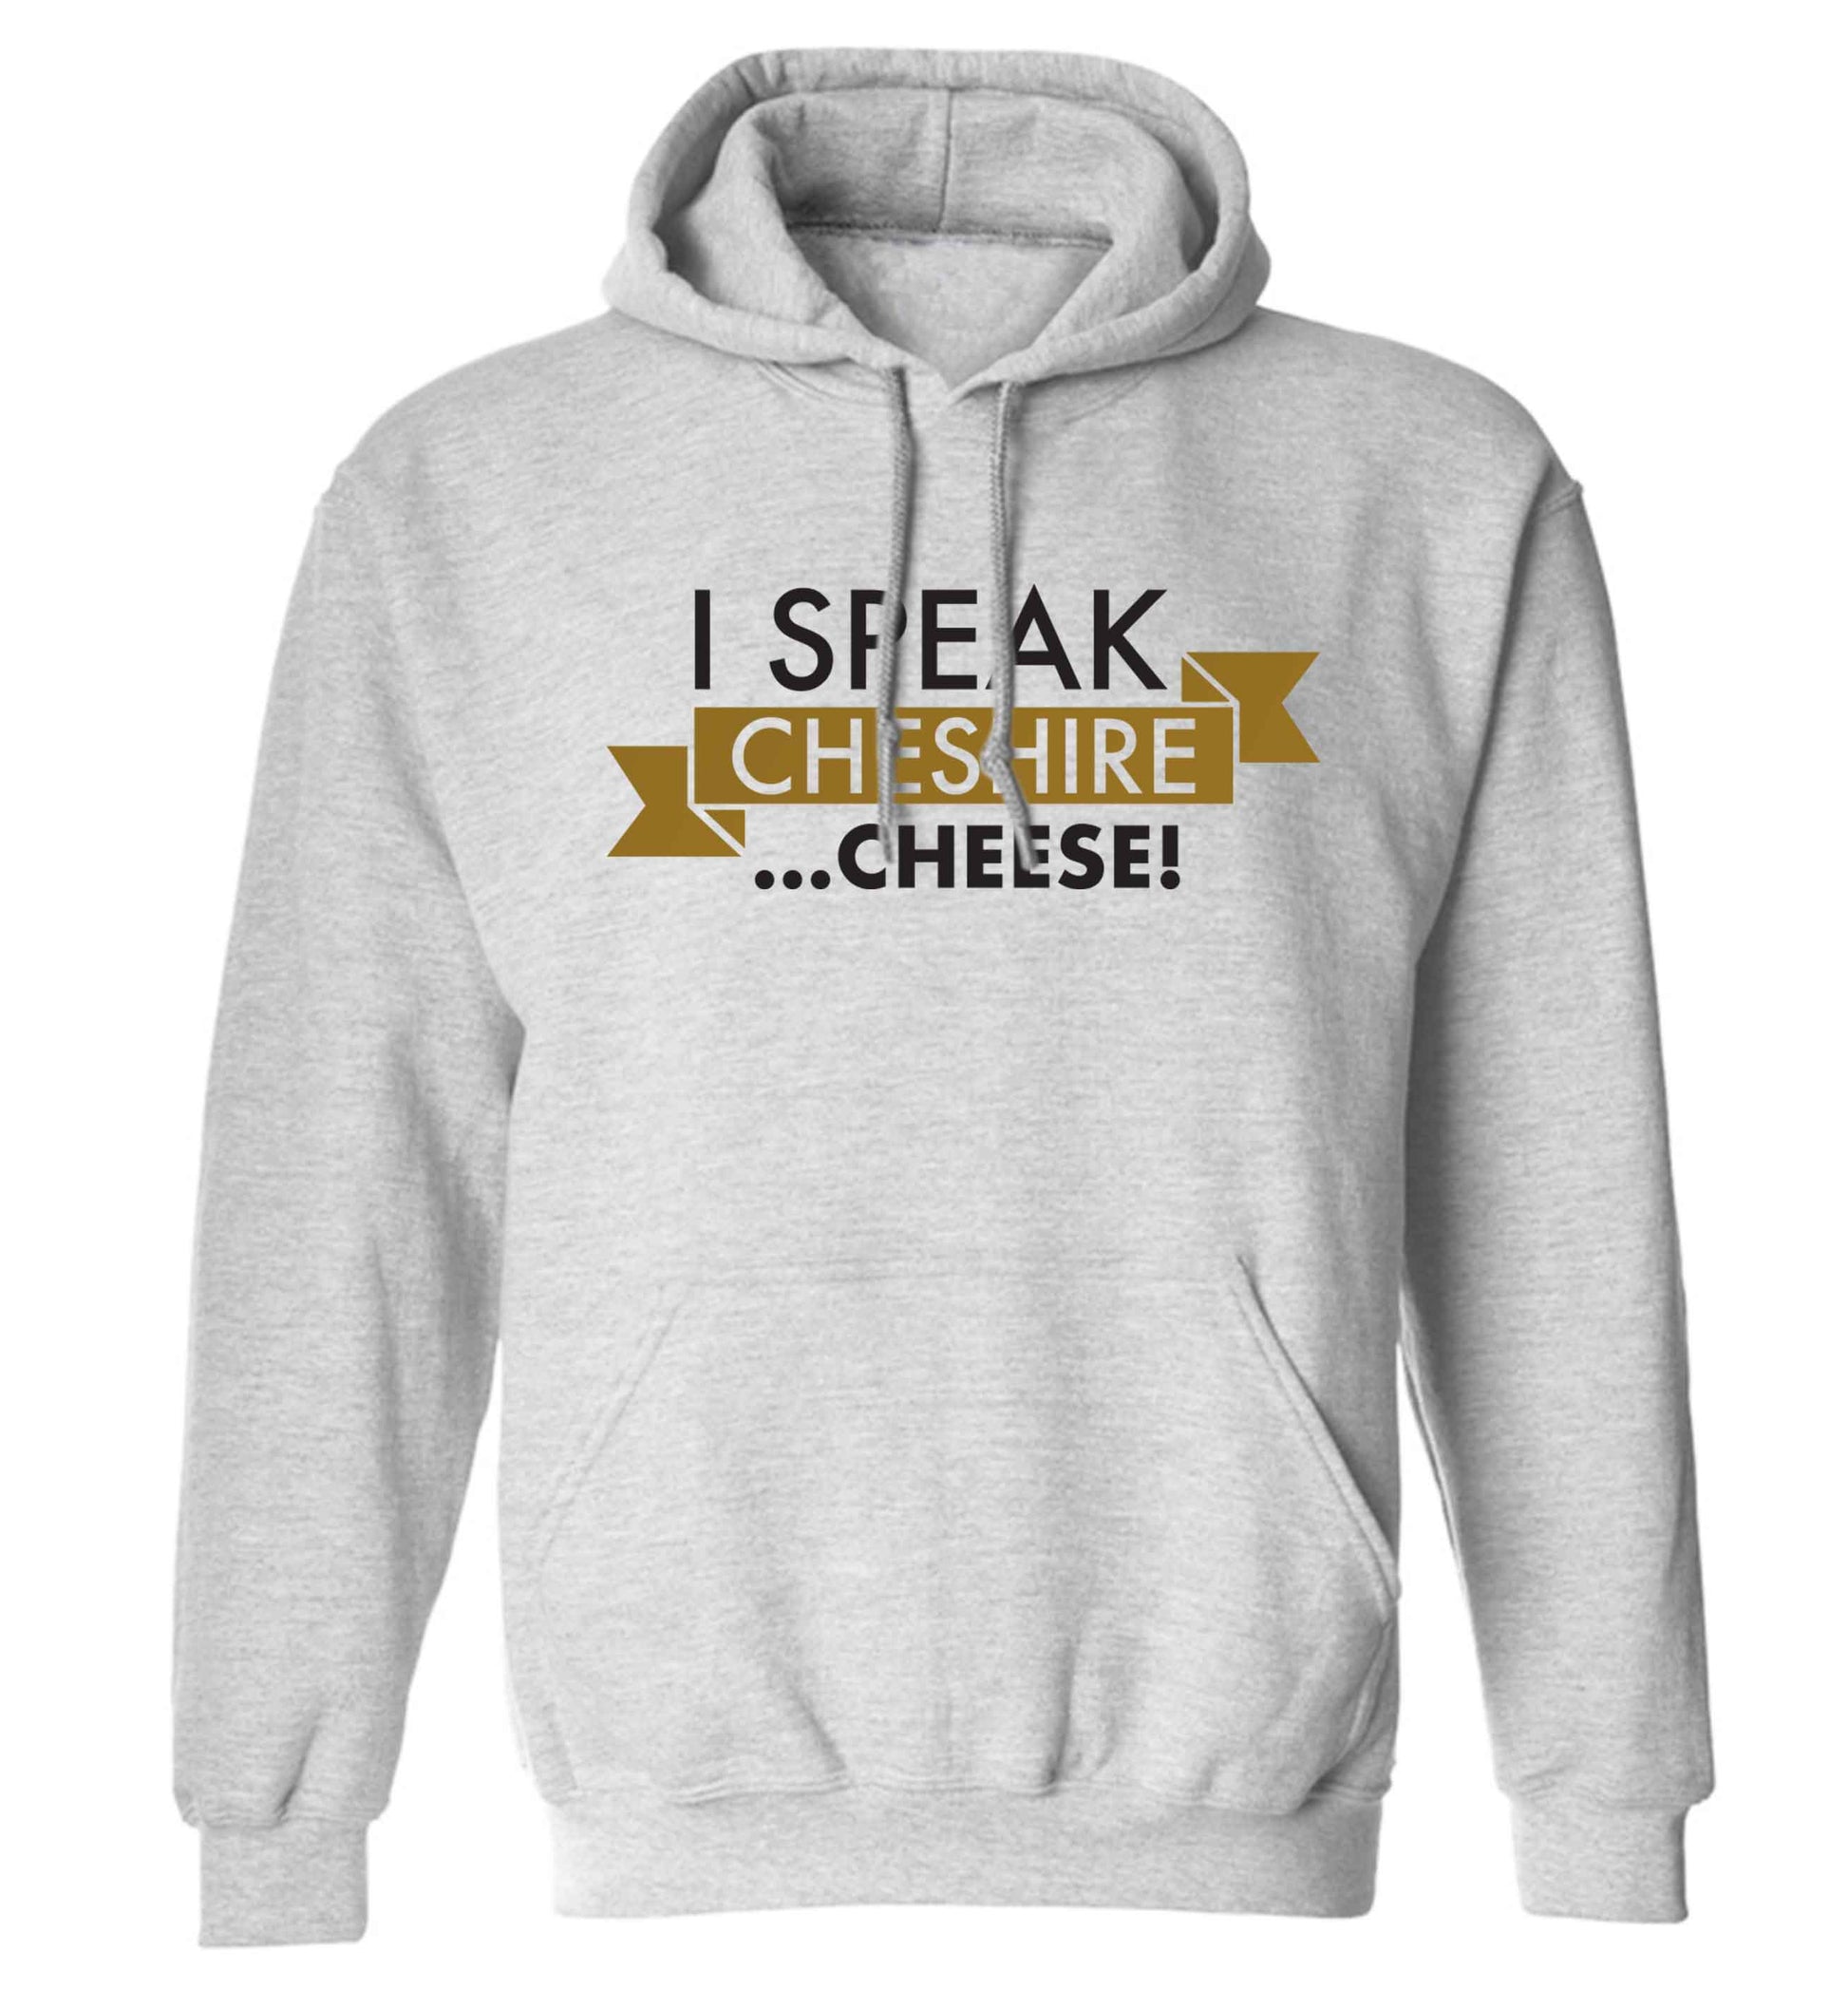 I speak Cheshire cheese adults unisex grey hoodie 2XL